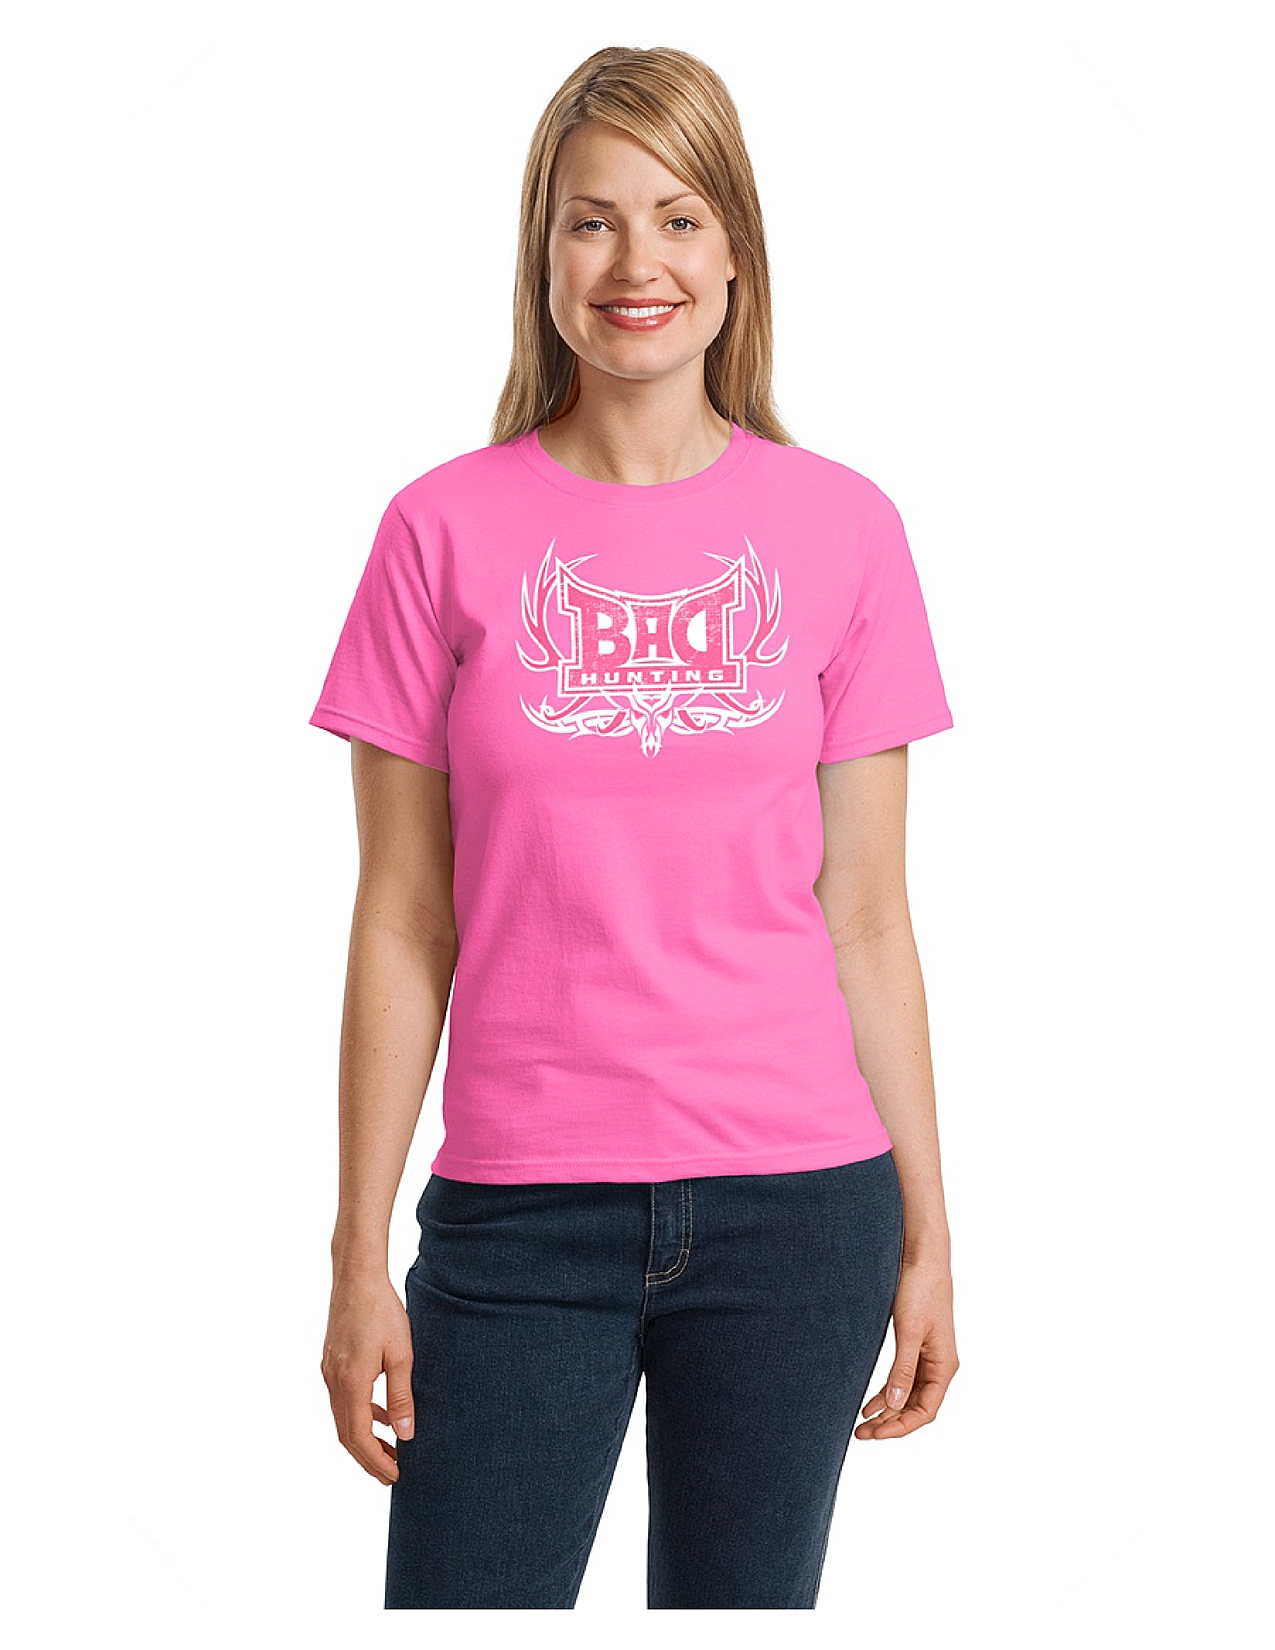 BAD Hunting T-Shirt Ladies Pink